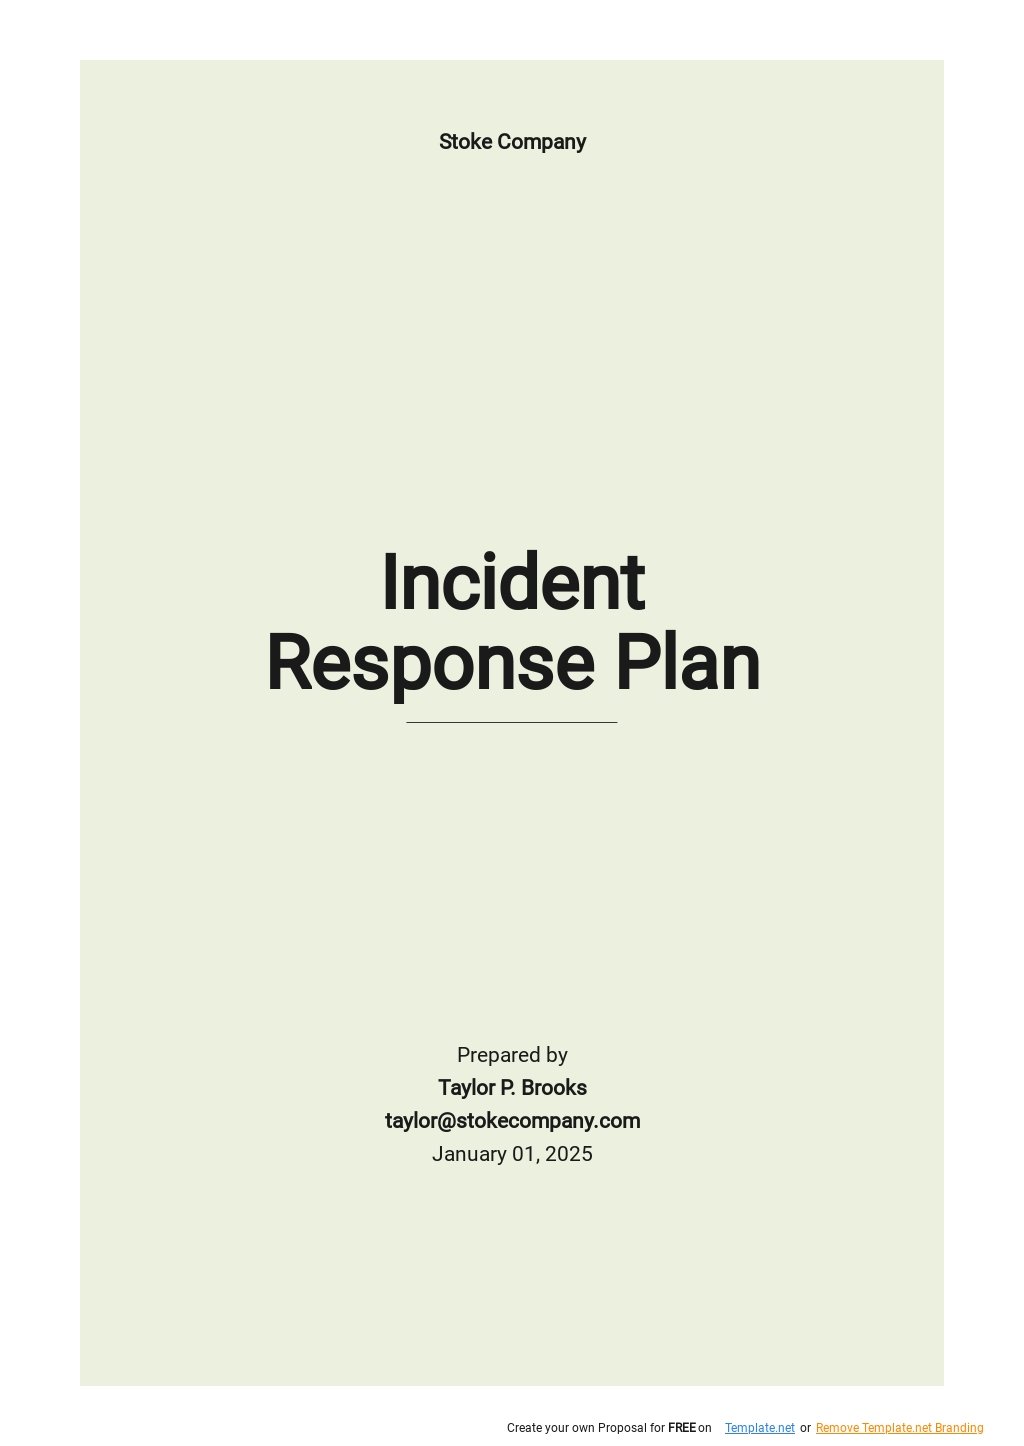 Incident Response Plan Template.jpe